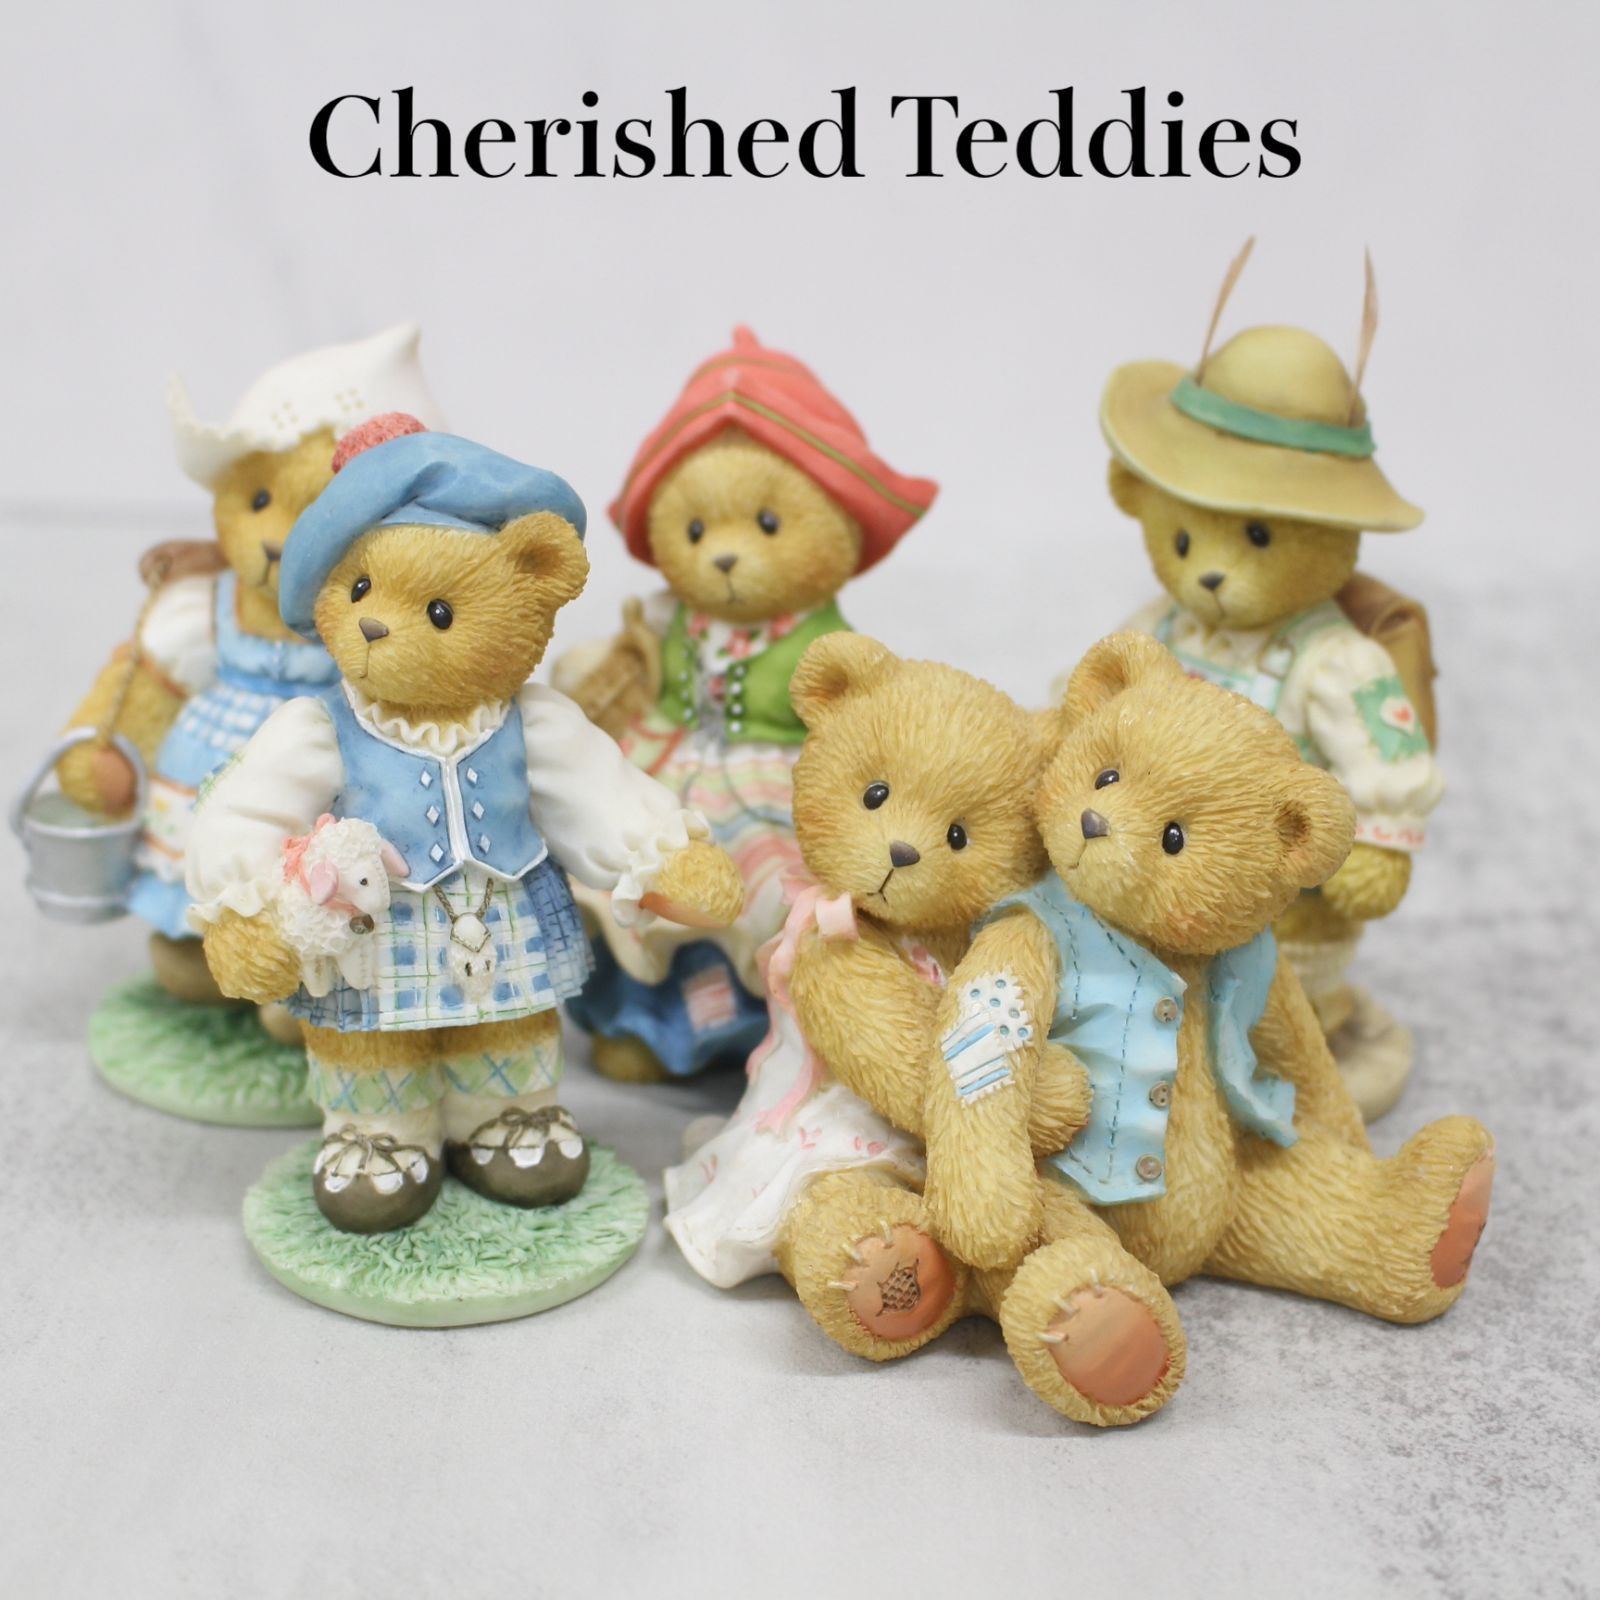 Cherished Teddies テディベア ④ フィギュリン 置物